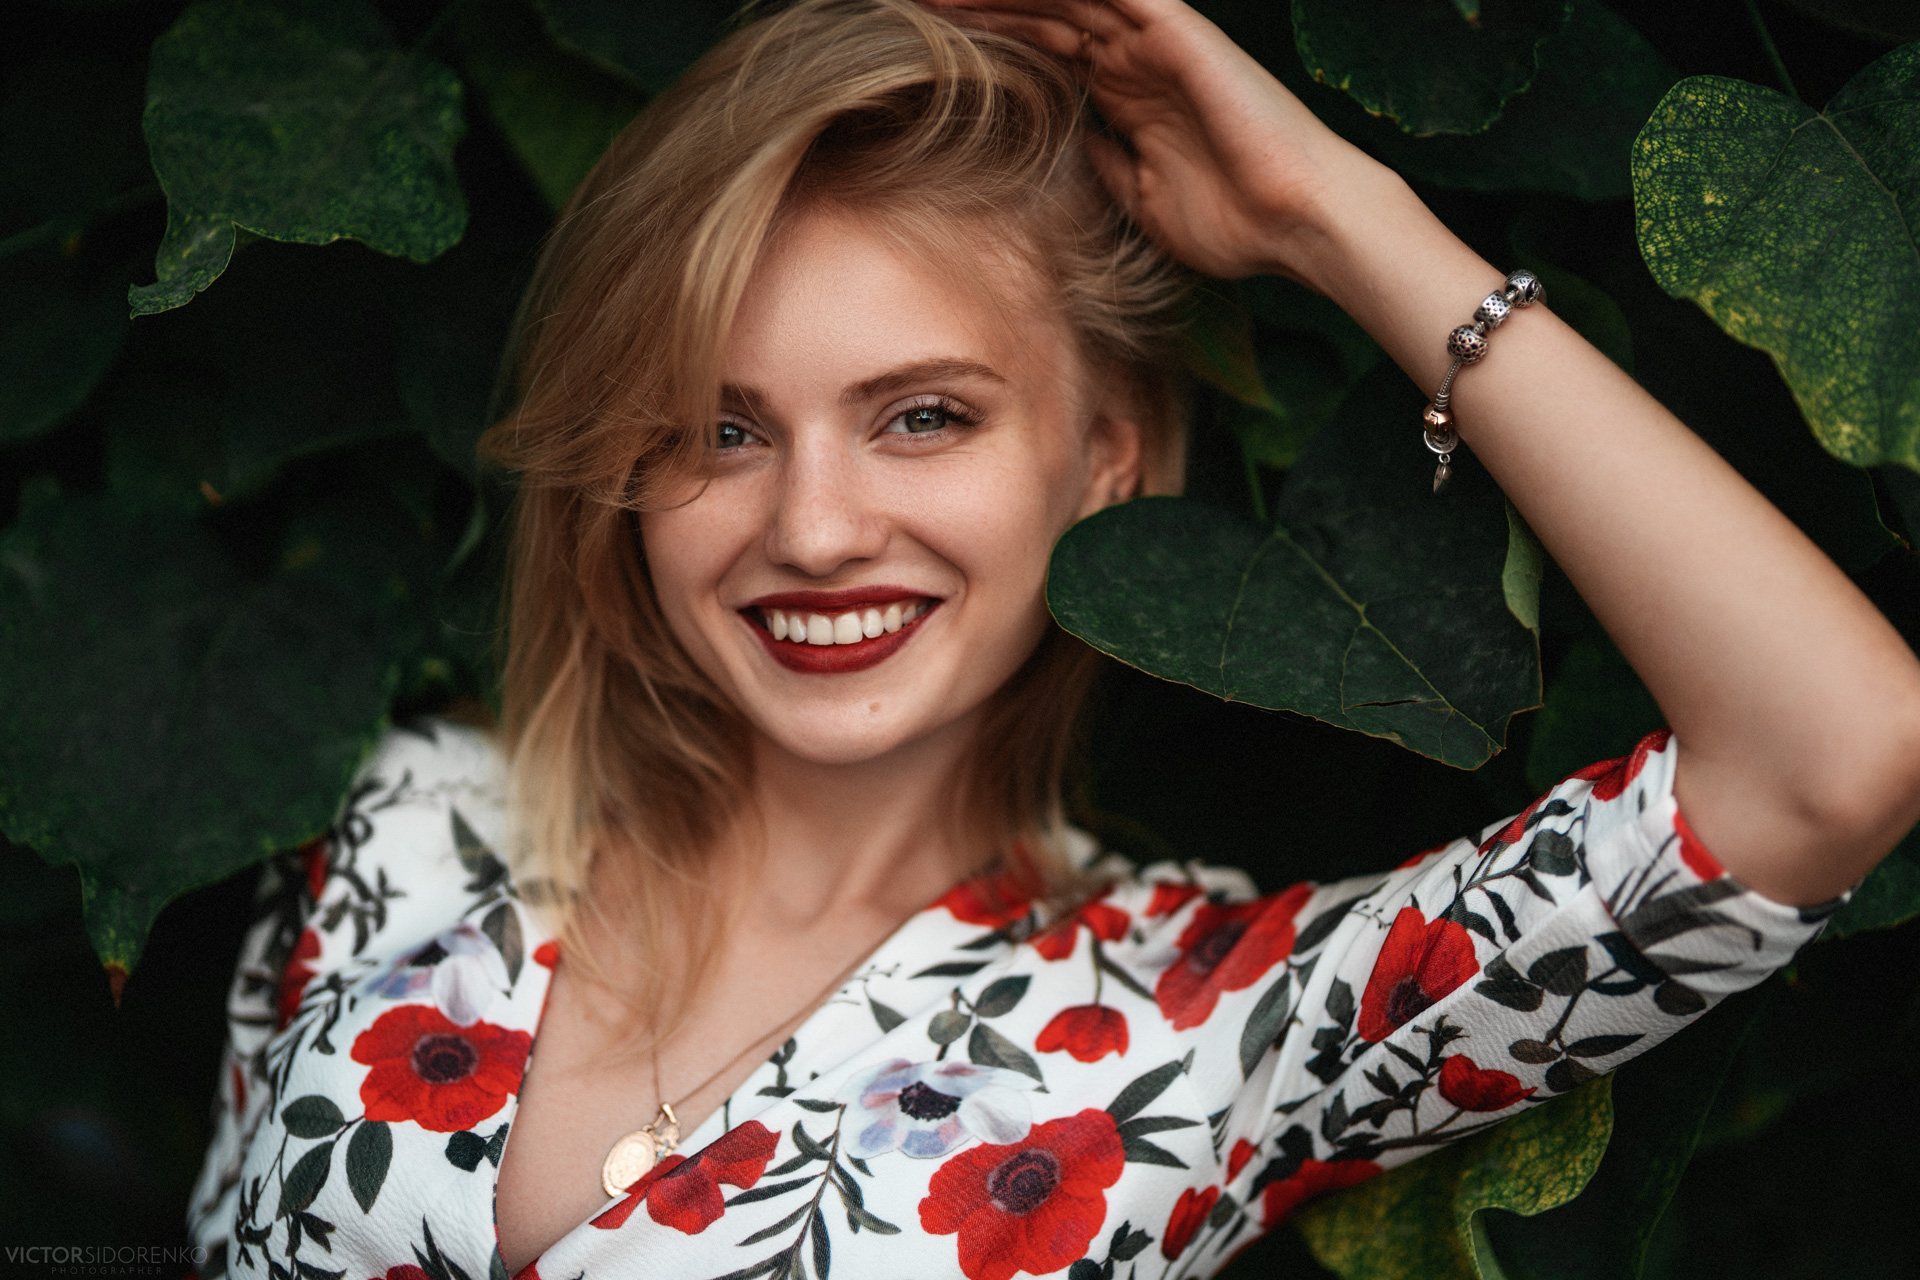 Katrin Enina Victor Sidorenko Women Model Blonde Touching Hair Looking At Viewer Smiling Red Lipstic 1920x1280